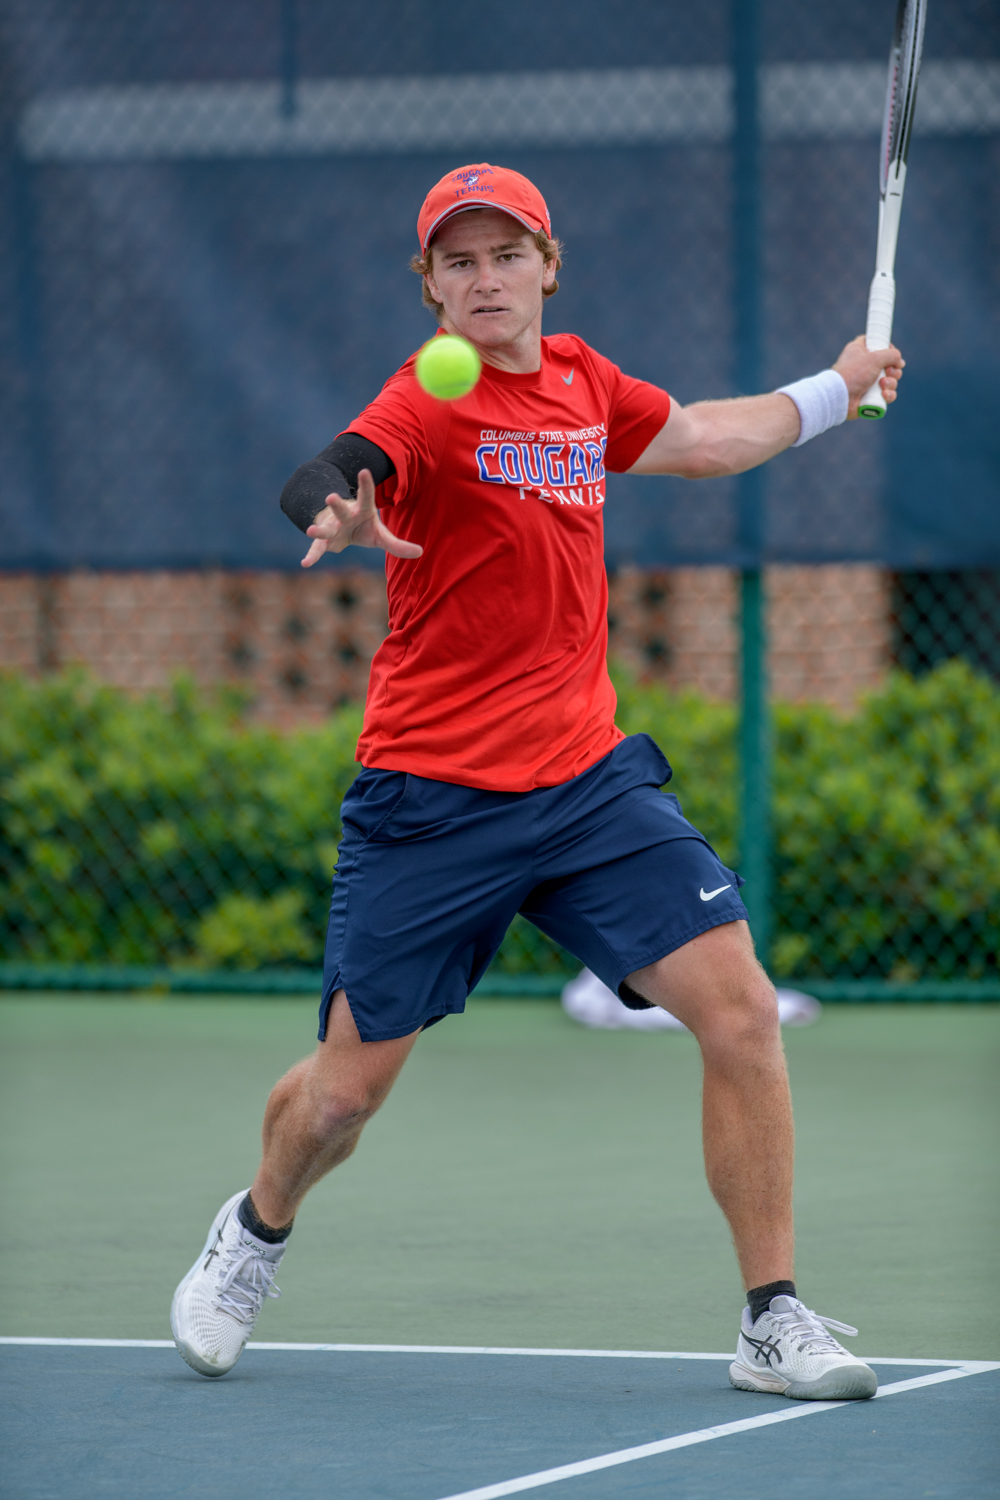 Daniel H. teaches tennis lessons in Columbus, GA